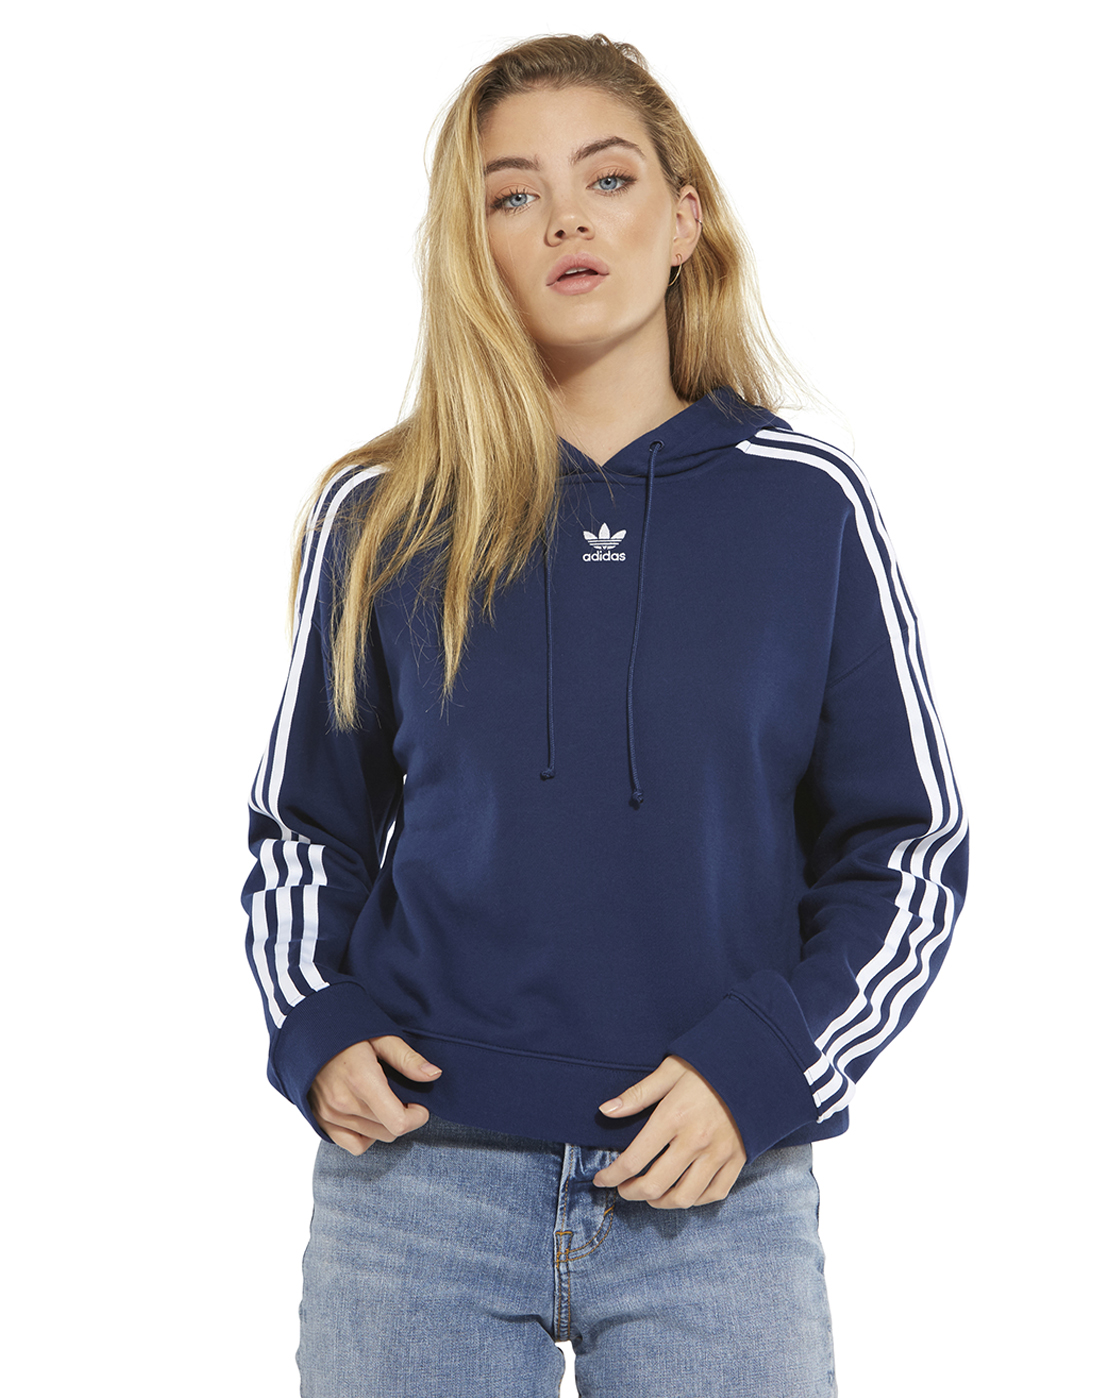 Cheap Adidas Hoodies For Women | semashow.com